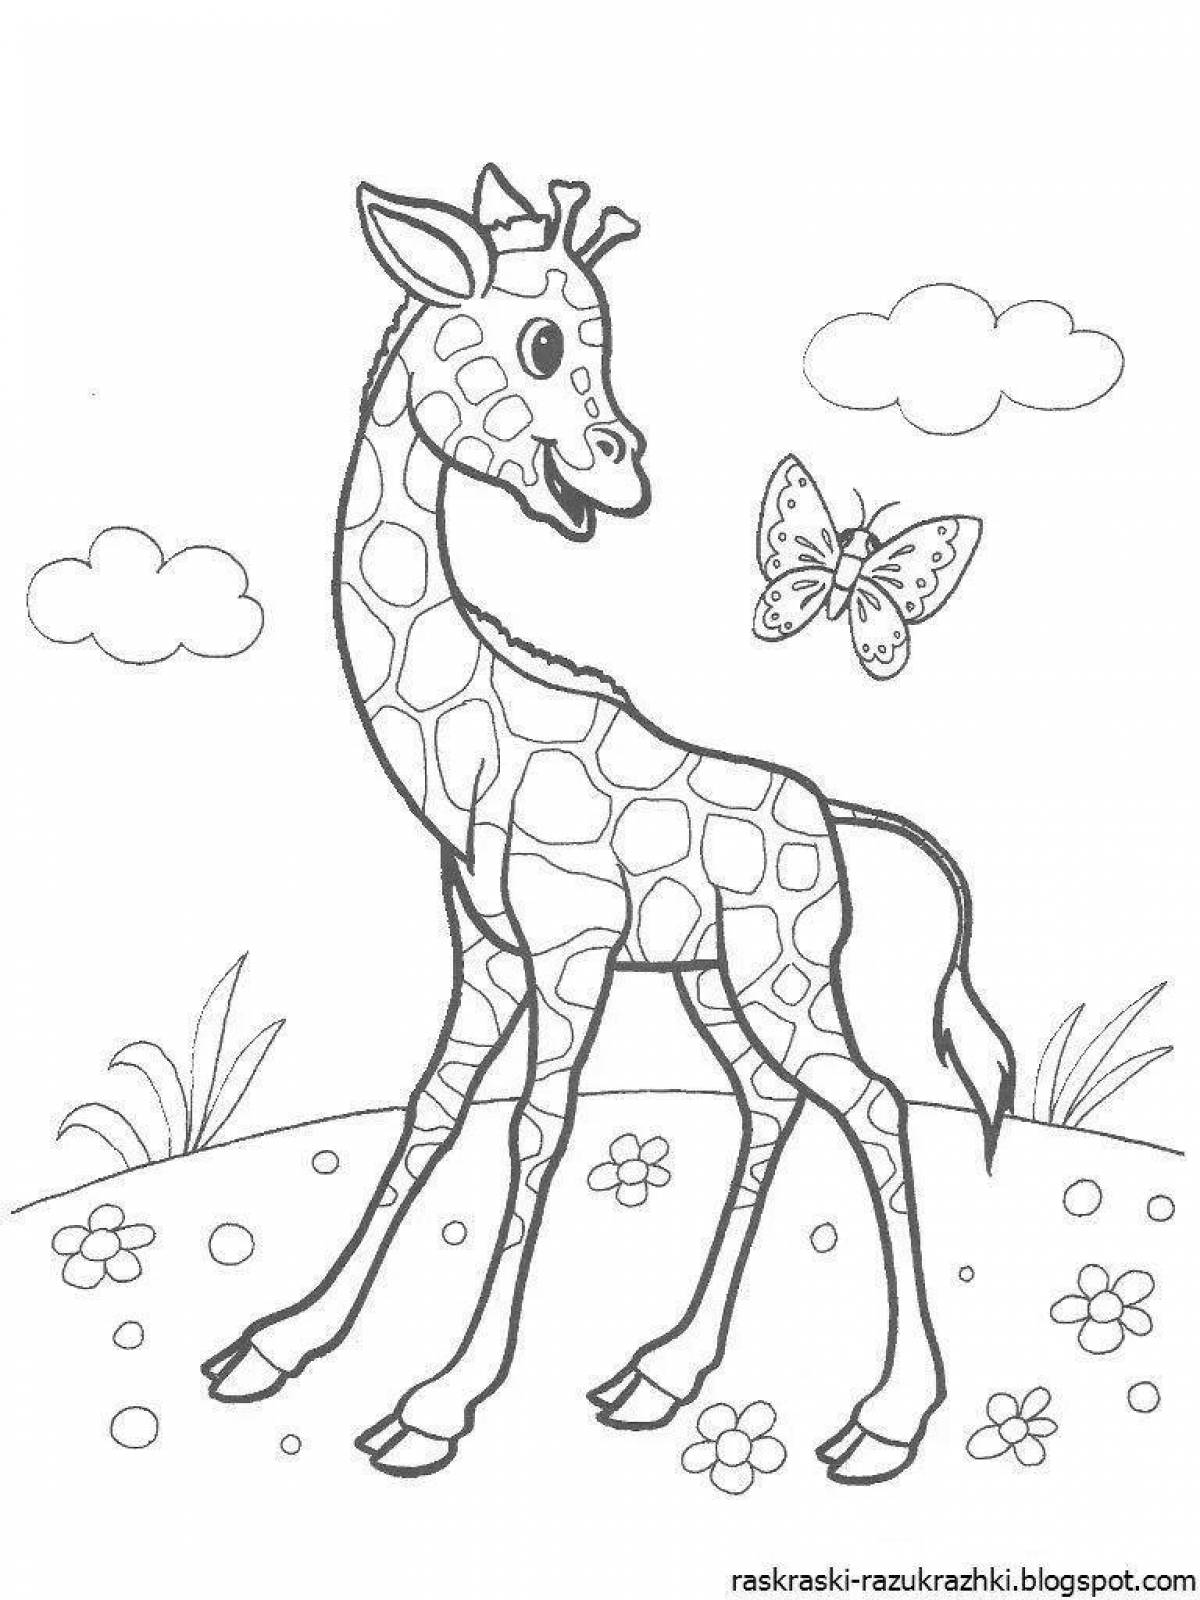 Cute giraffe coloring book for kids